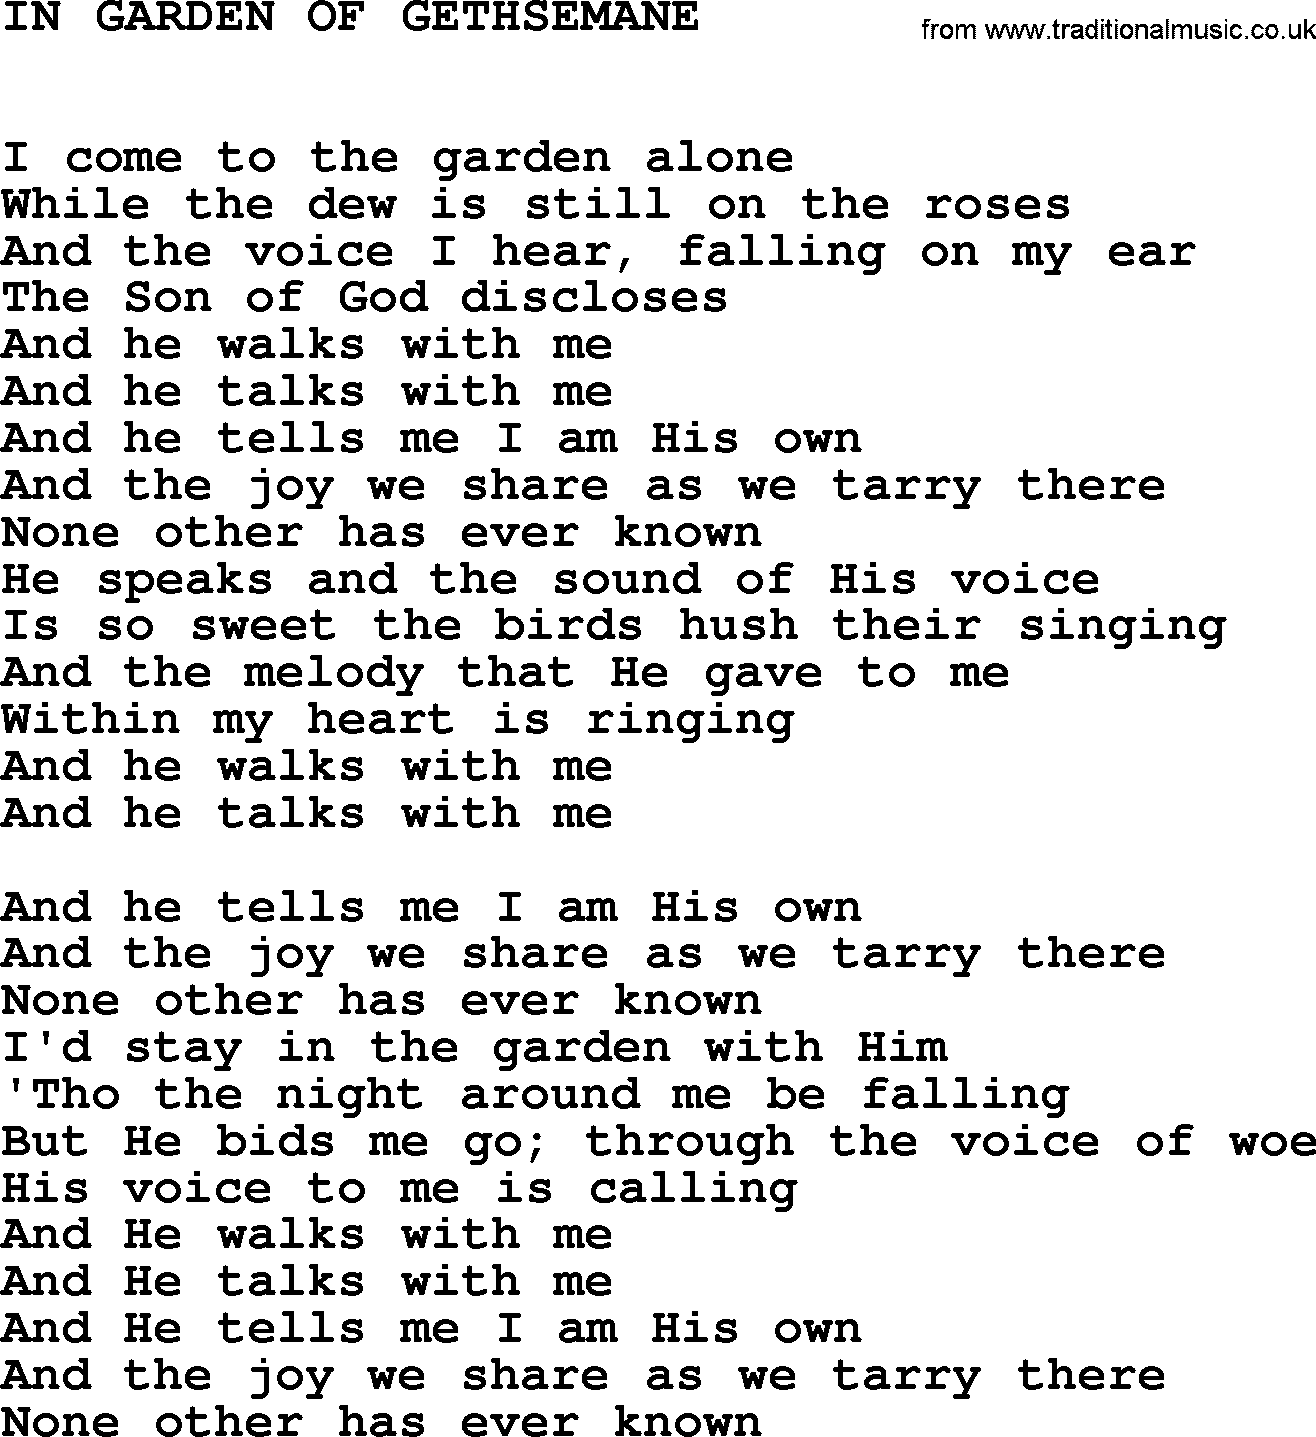 Johnny Cash song In Garden Of Gethsemane.txt lyrics